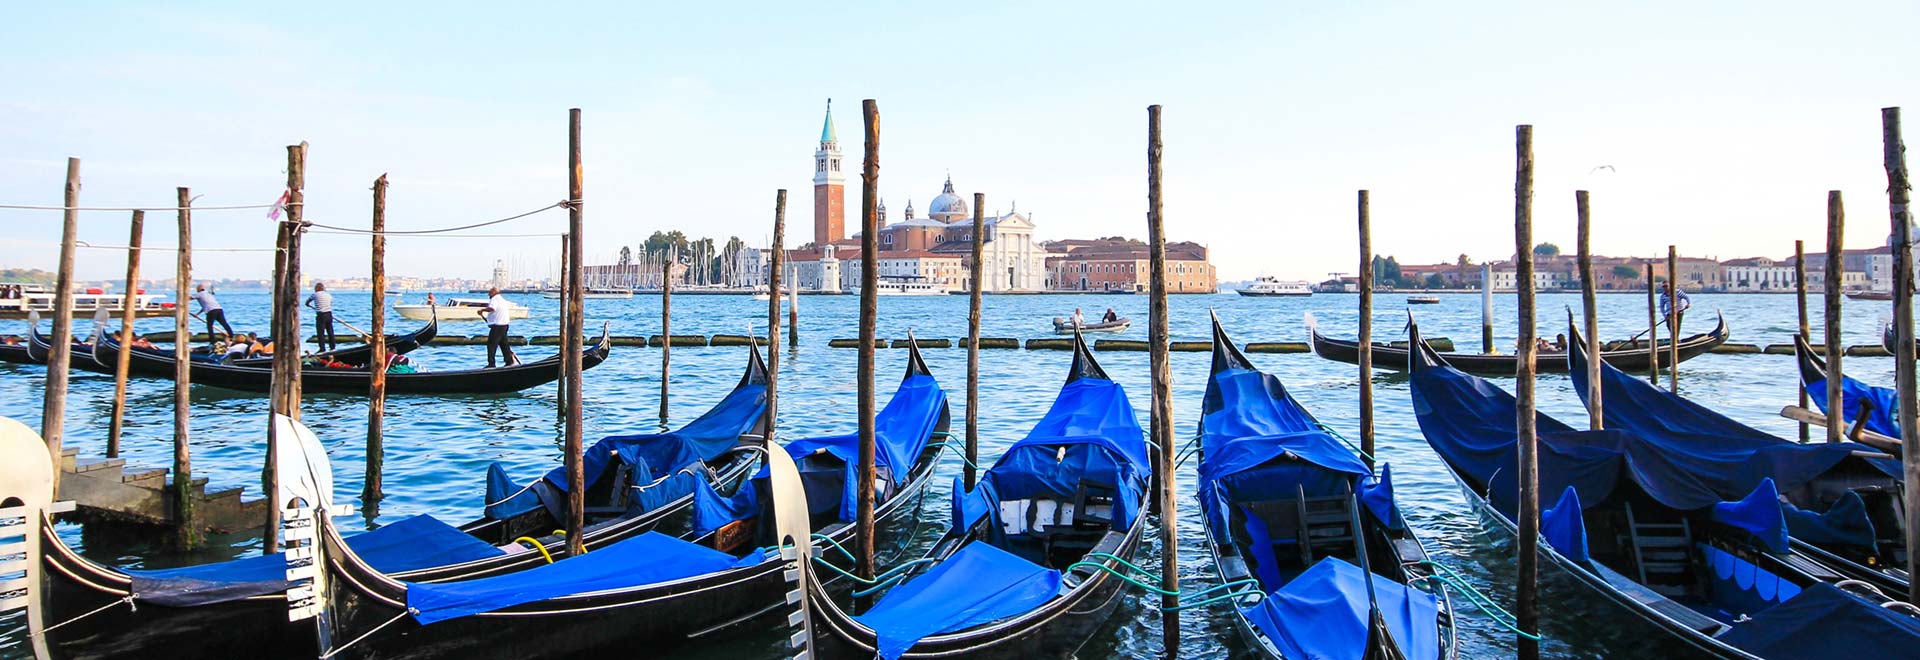 Europe Italian Treasures Rome Florence Venice Gondolas MH